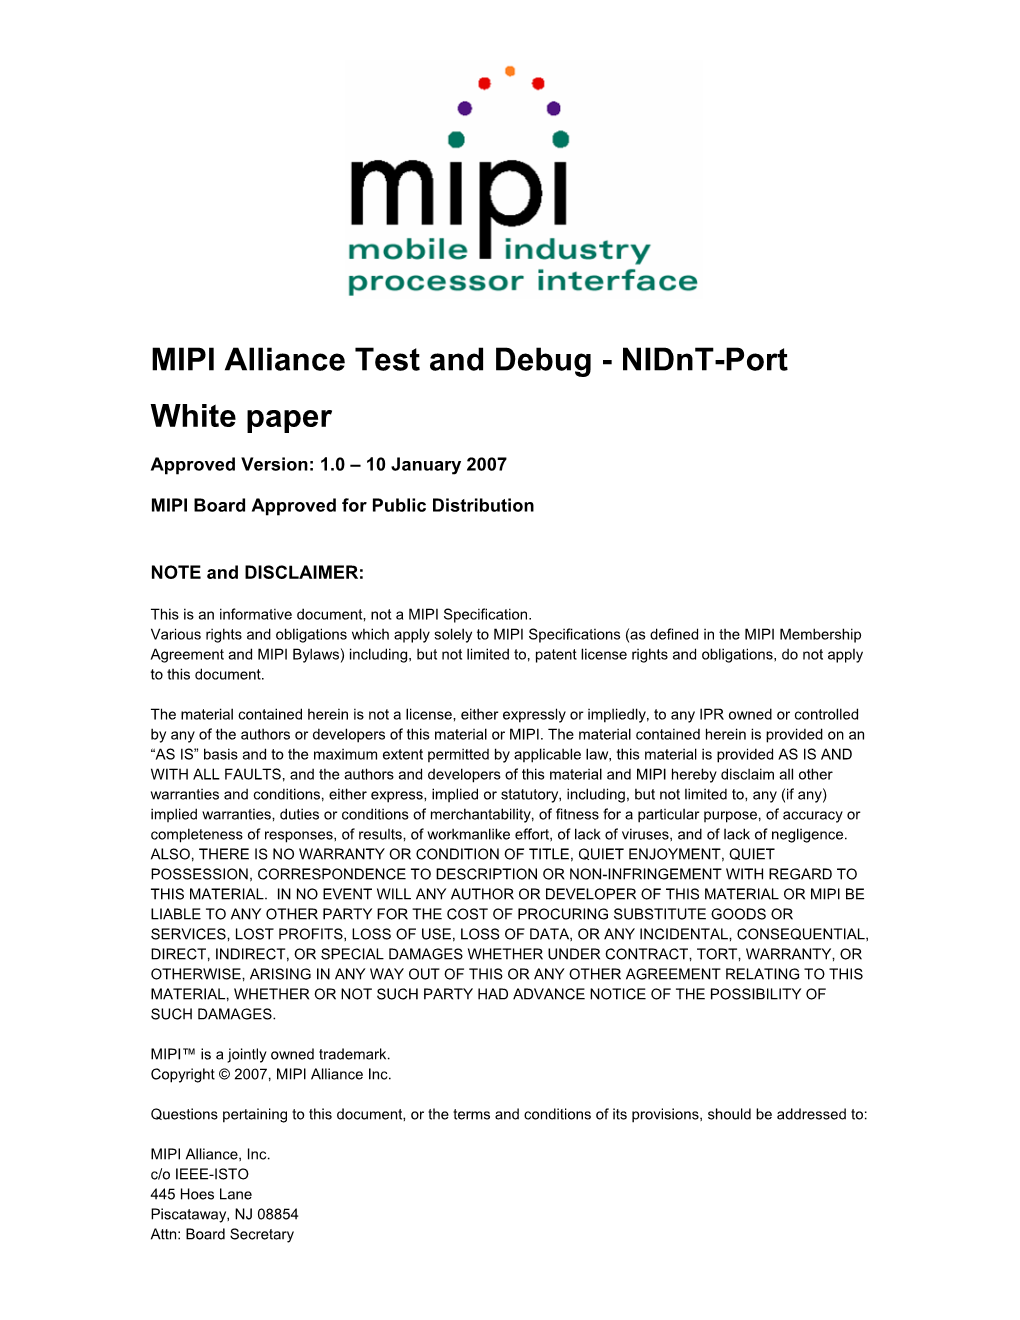 MIPI Alliance Test and Debug - Nidnt-Port White Paper